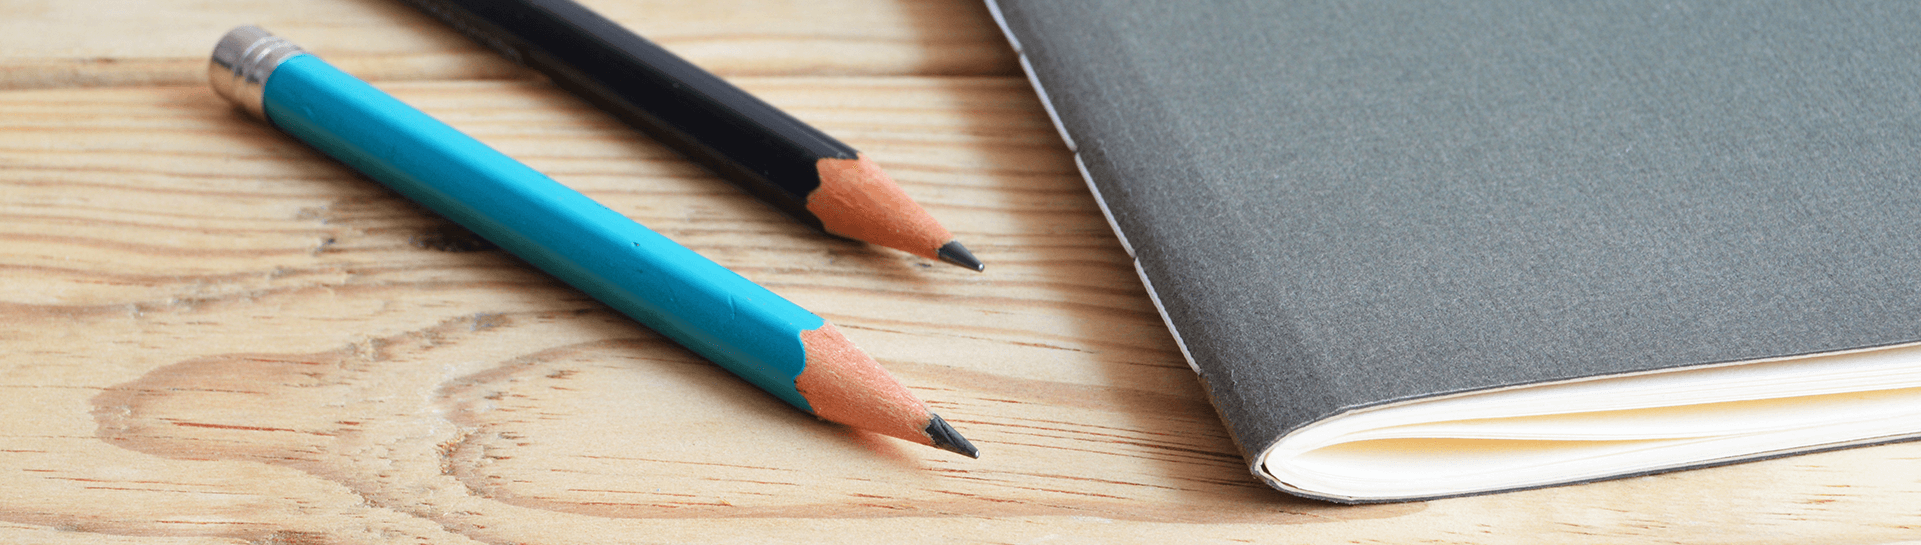 Pencils next to a notebook